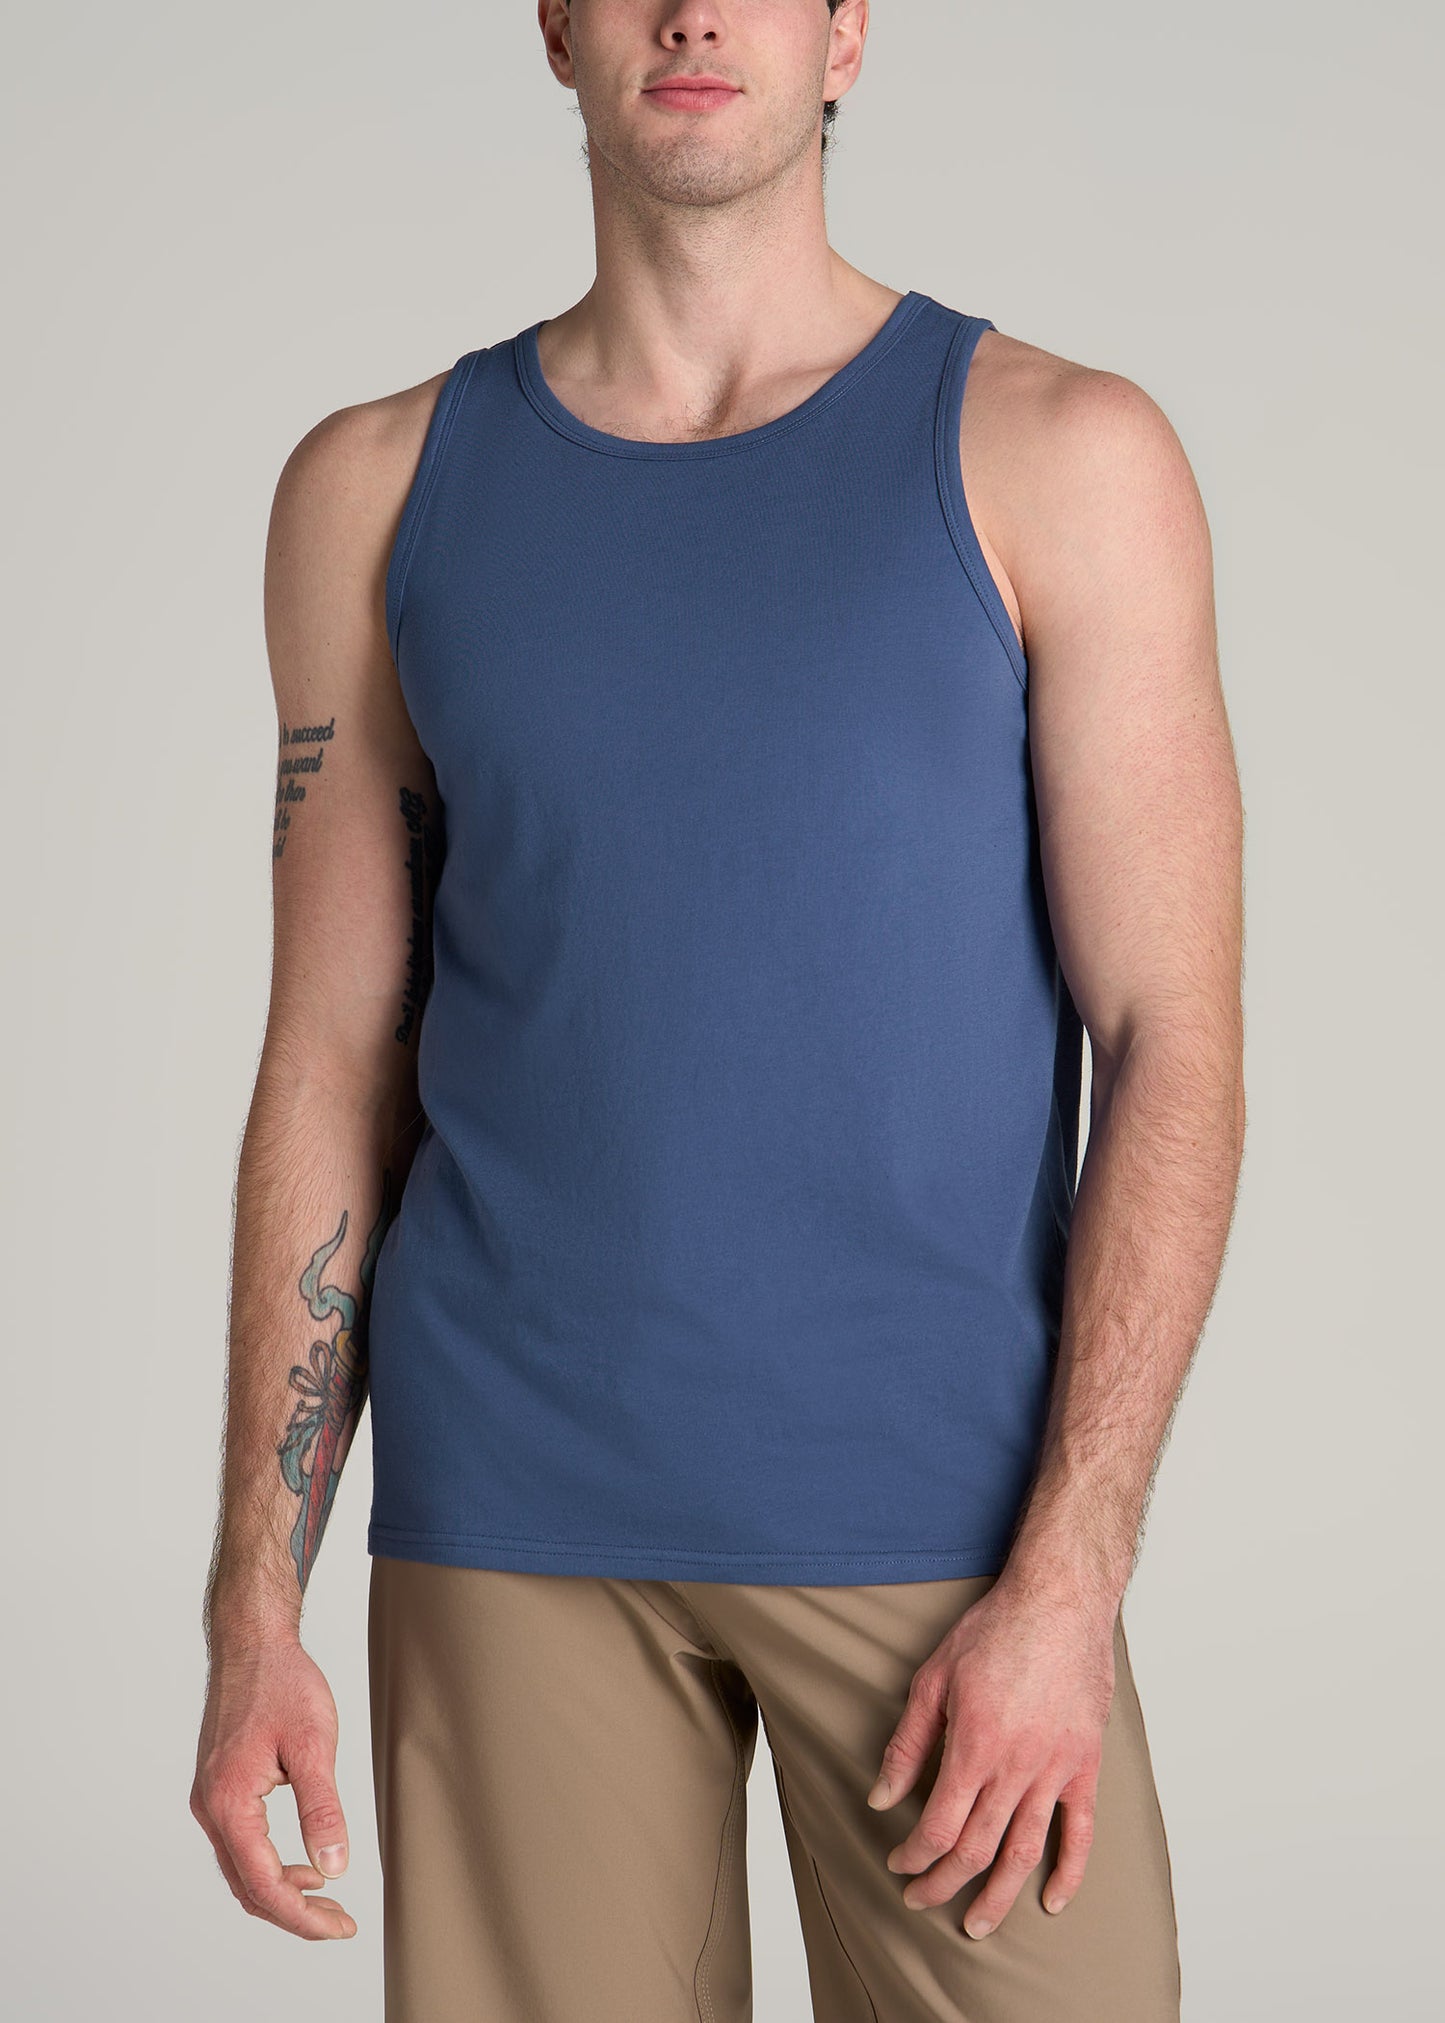 The Essentials: Men's Tall SLIM-FIT Beach Tank Top in Steel Blue